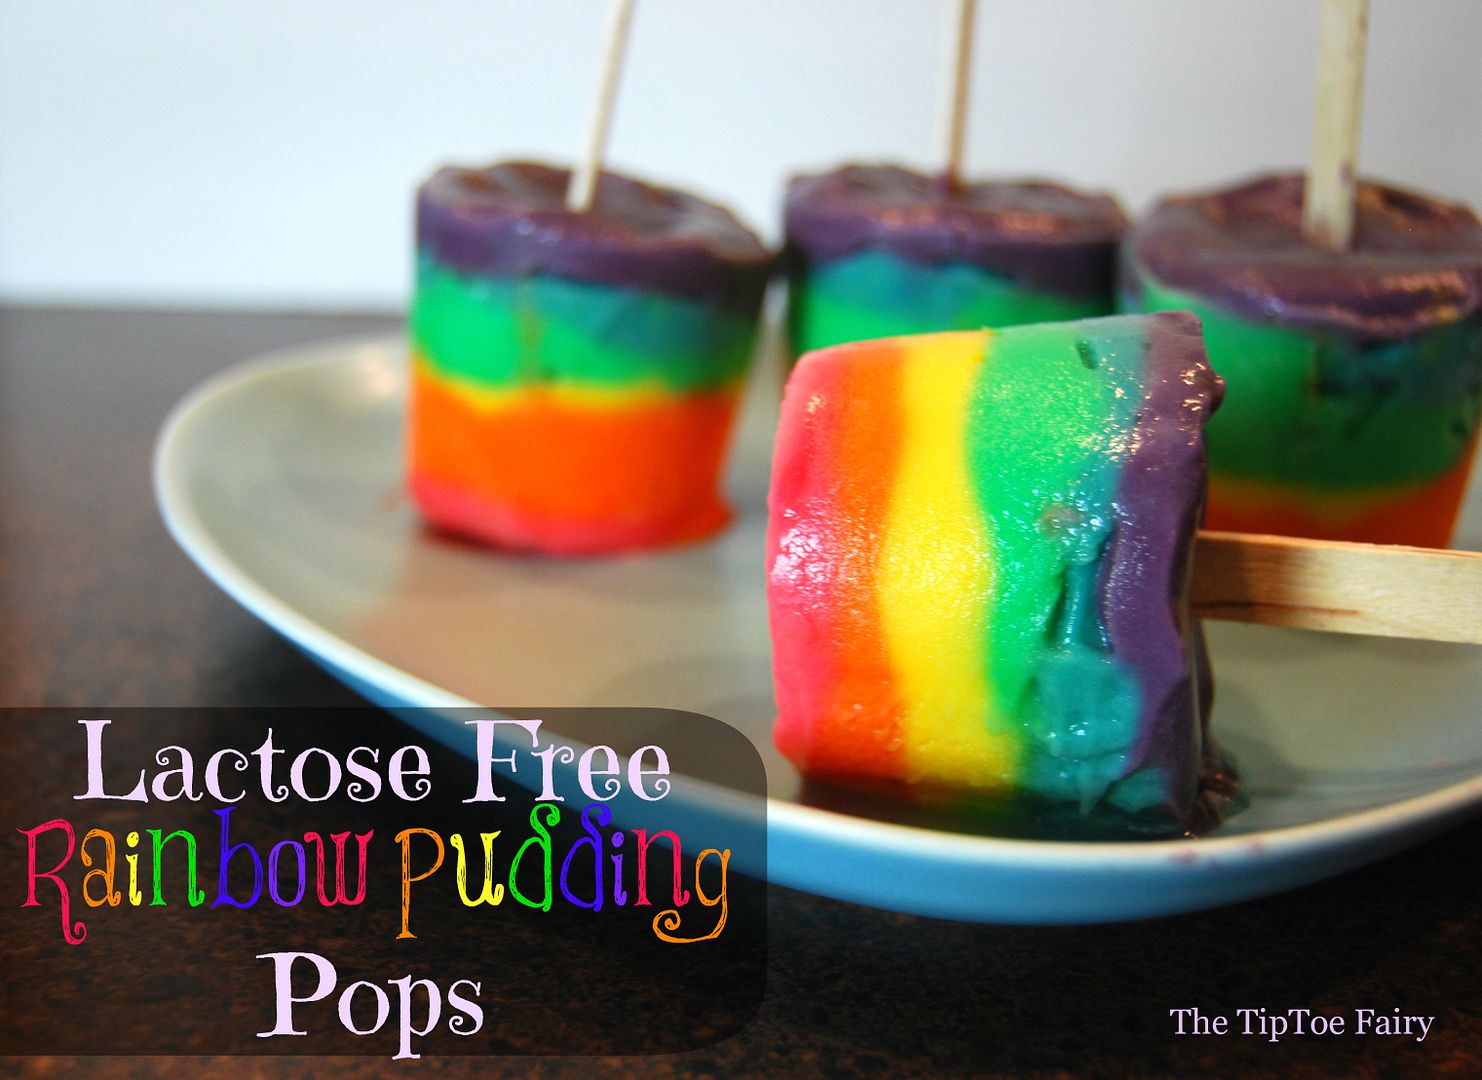 Lactose Free Rainbow Pudding Pops